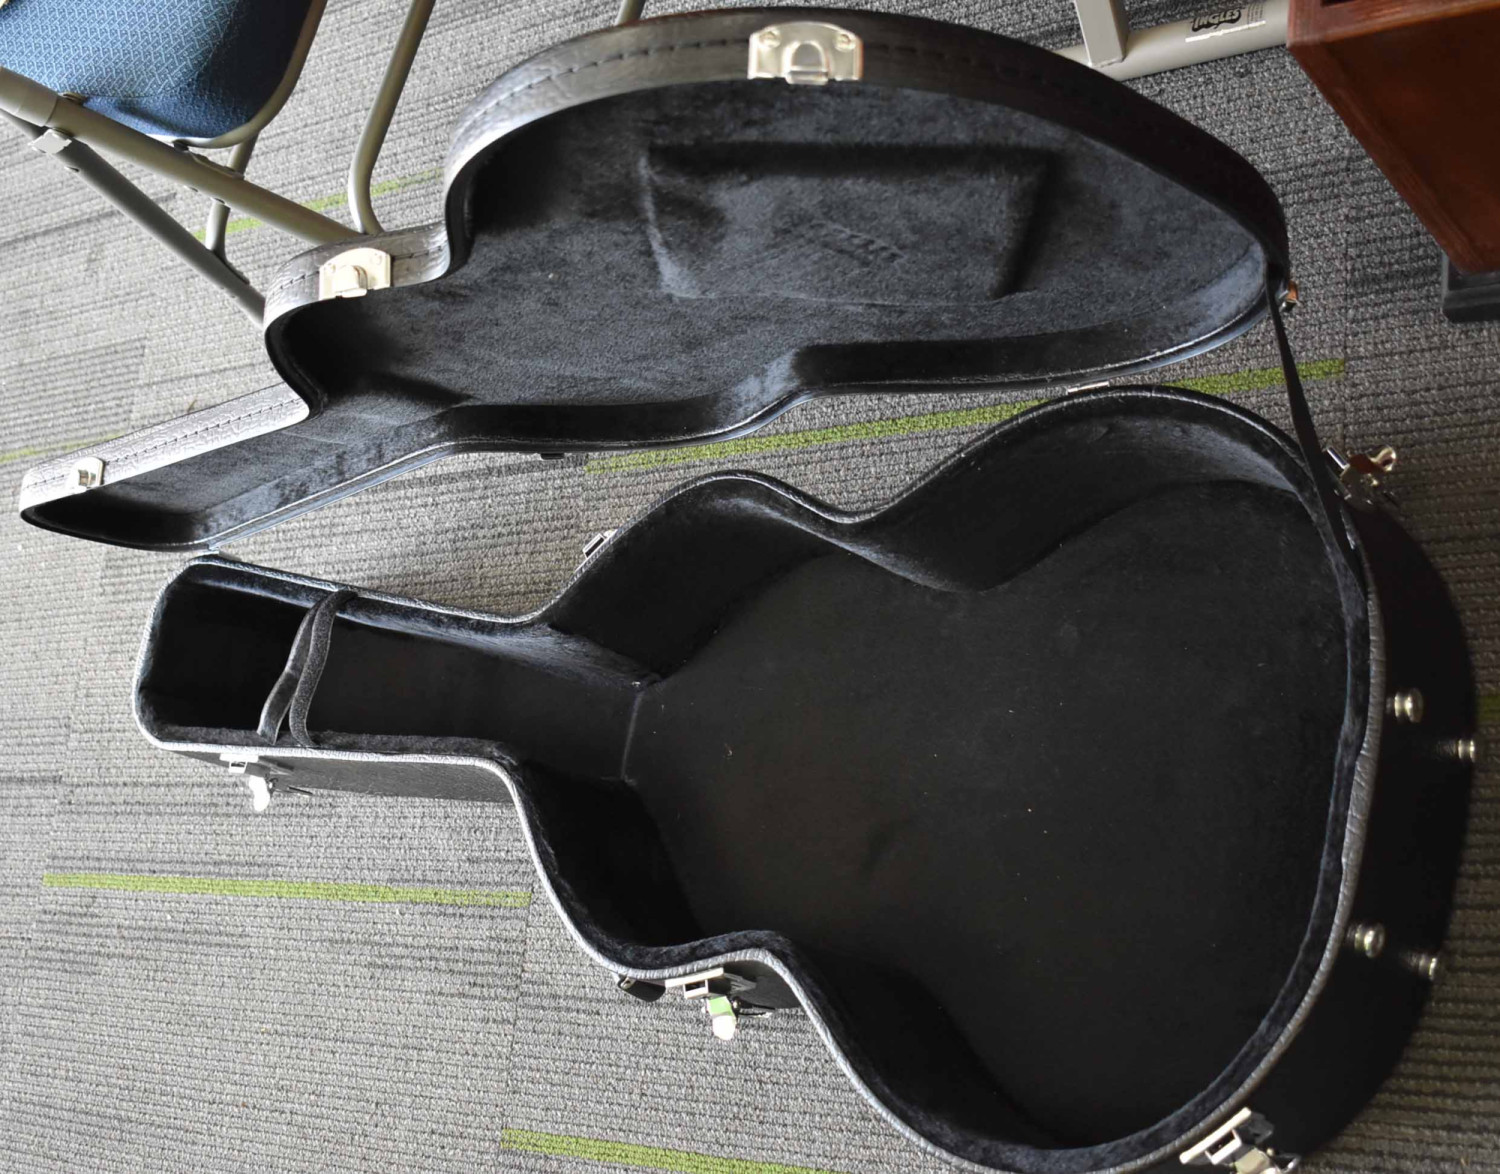 Weissenborn Acoustic Electric Hawaiian Steel Guitar Replica